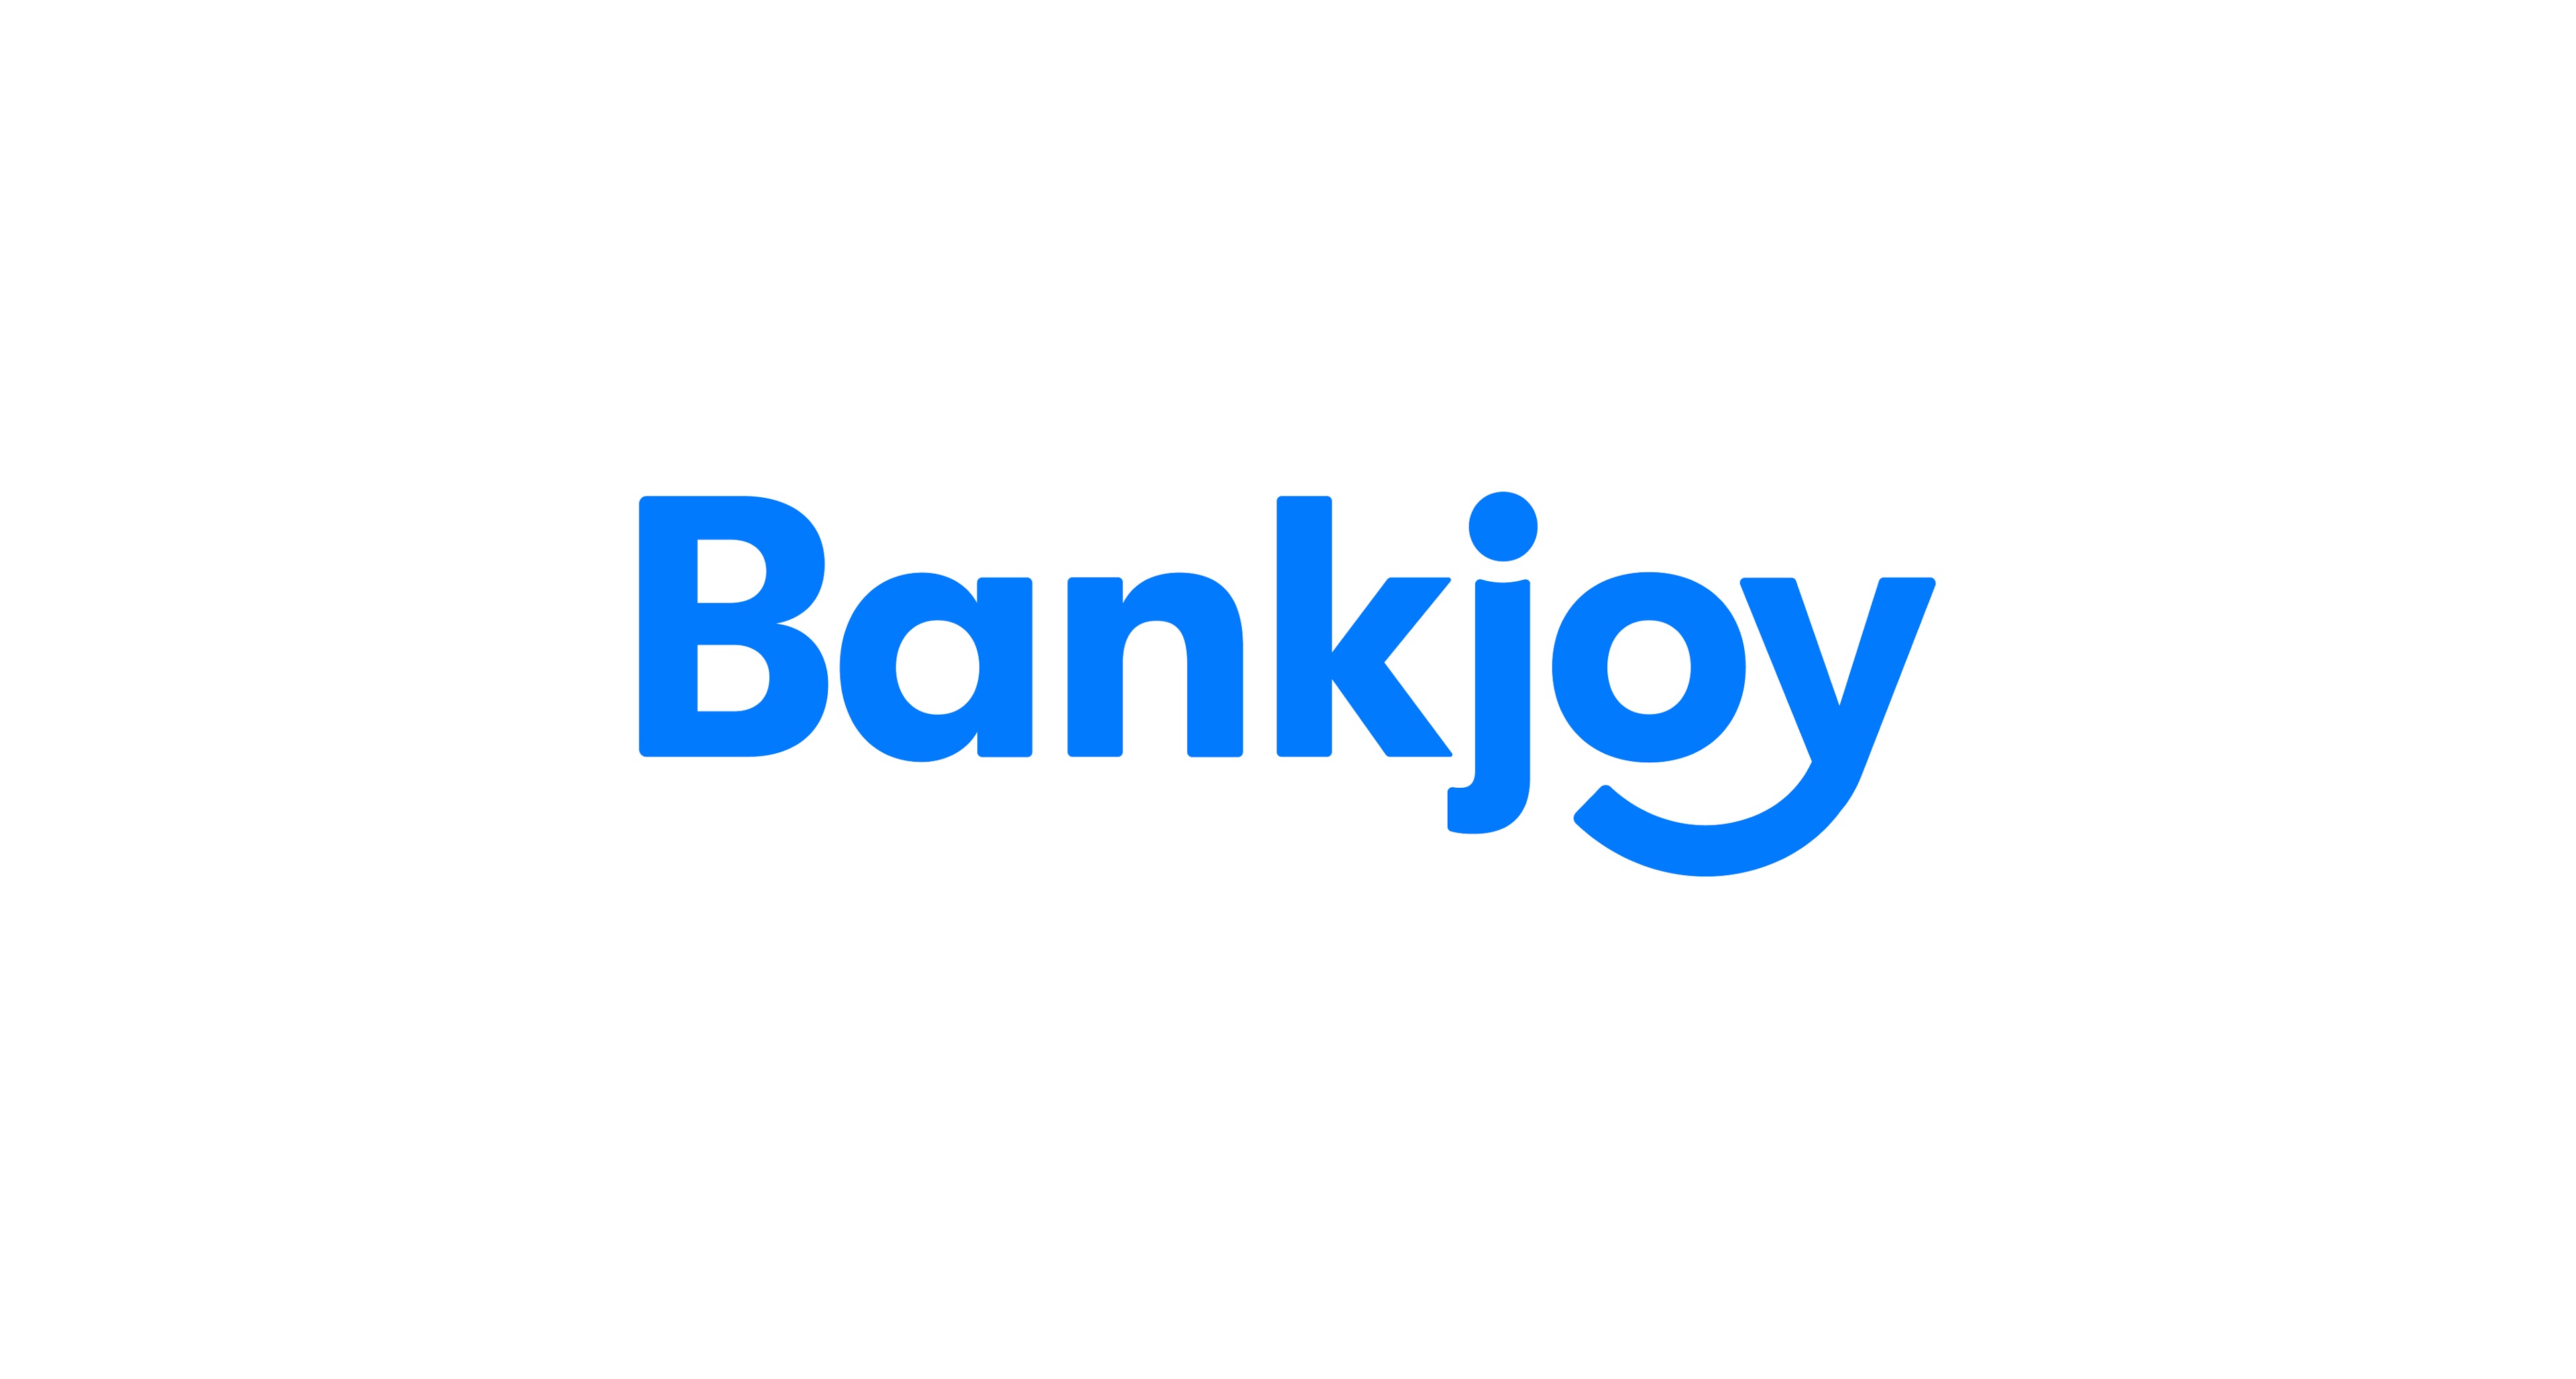 Bankjoy logo wordmark